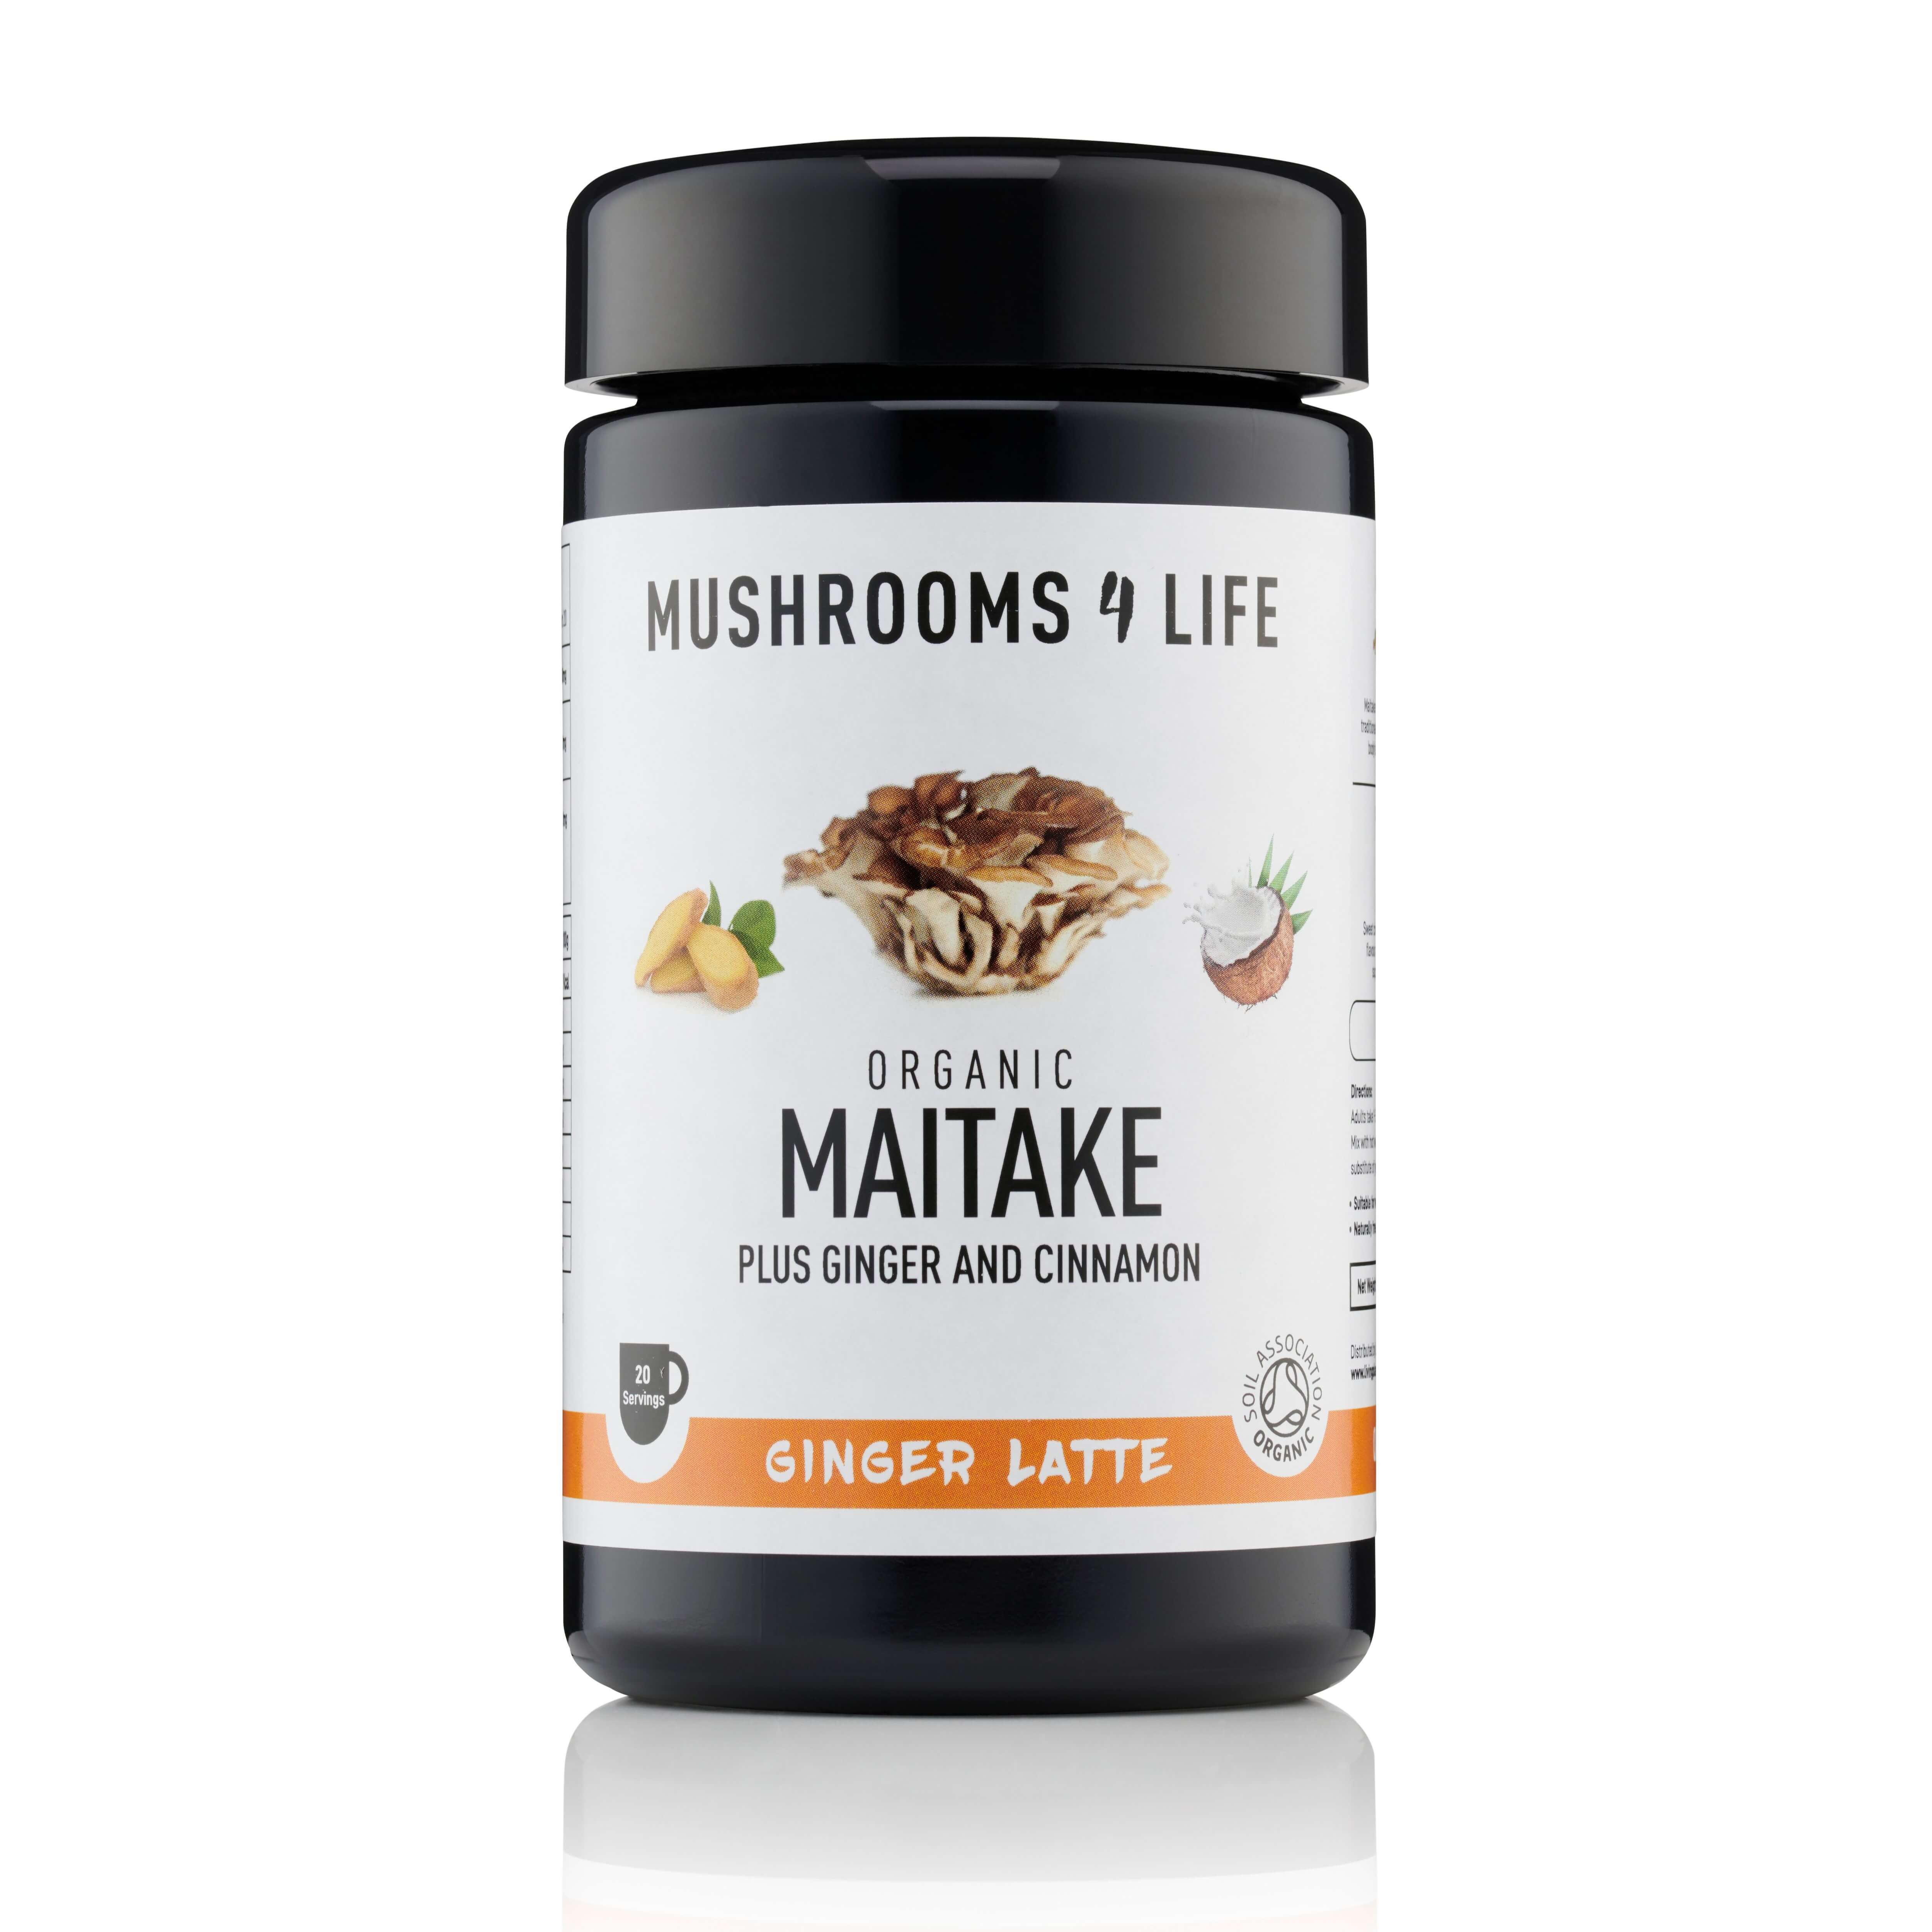 Mushrooms4Life | Kokosové latté - Maitake & Ginger - 5.5 g, 55 g,110 g Obsah: 110g - 20 dávek